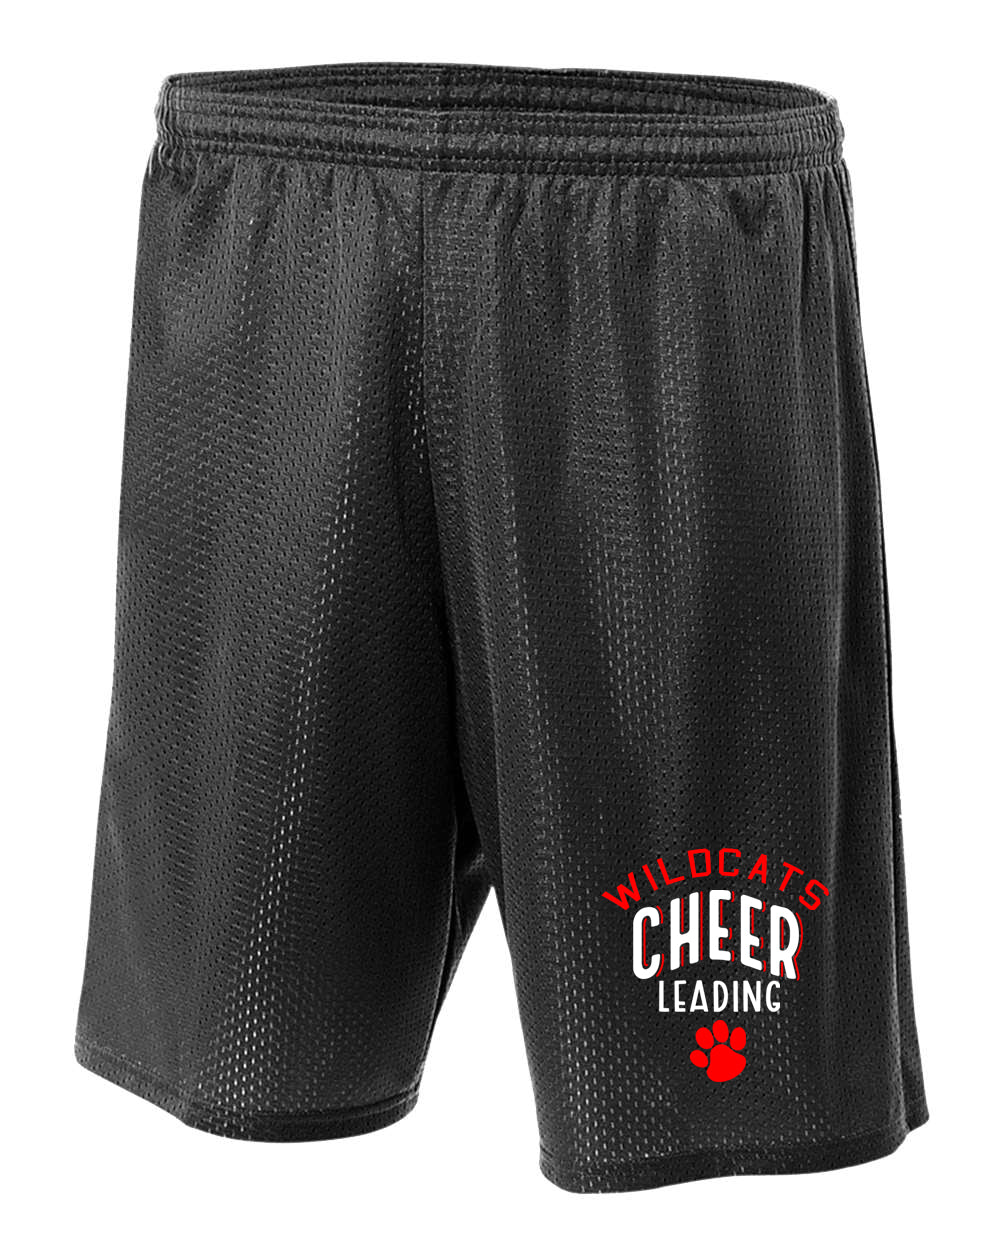 Wildcats Cheer Design 5 Mesh Shorts